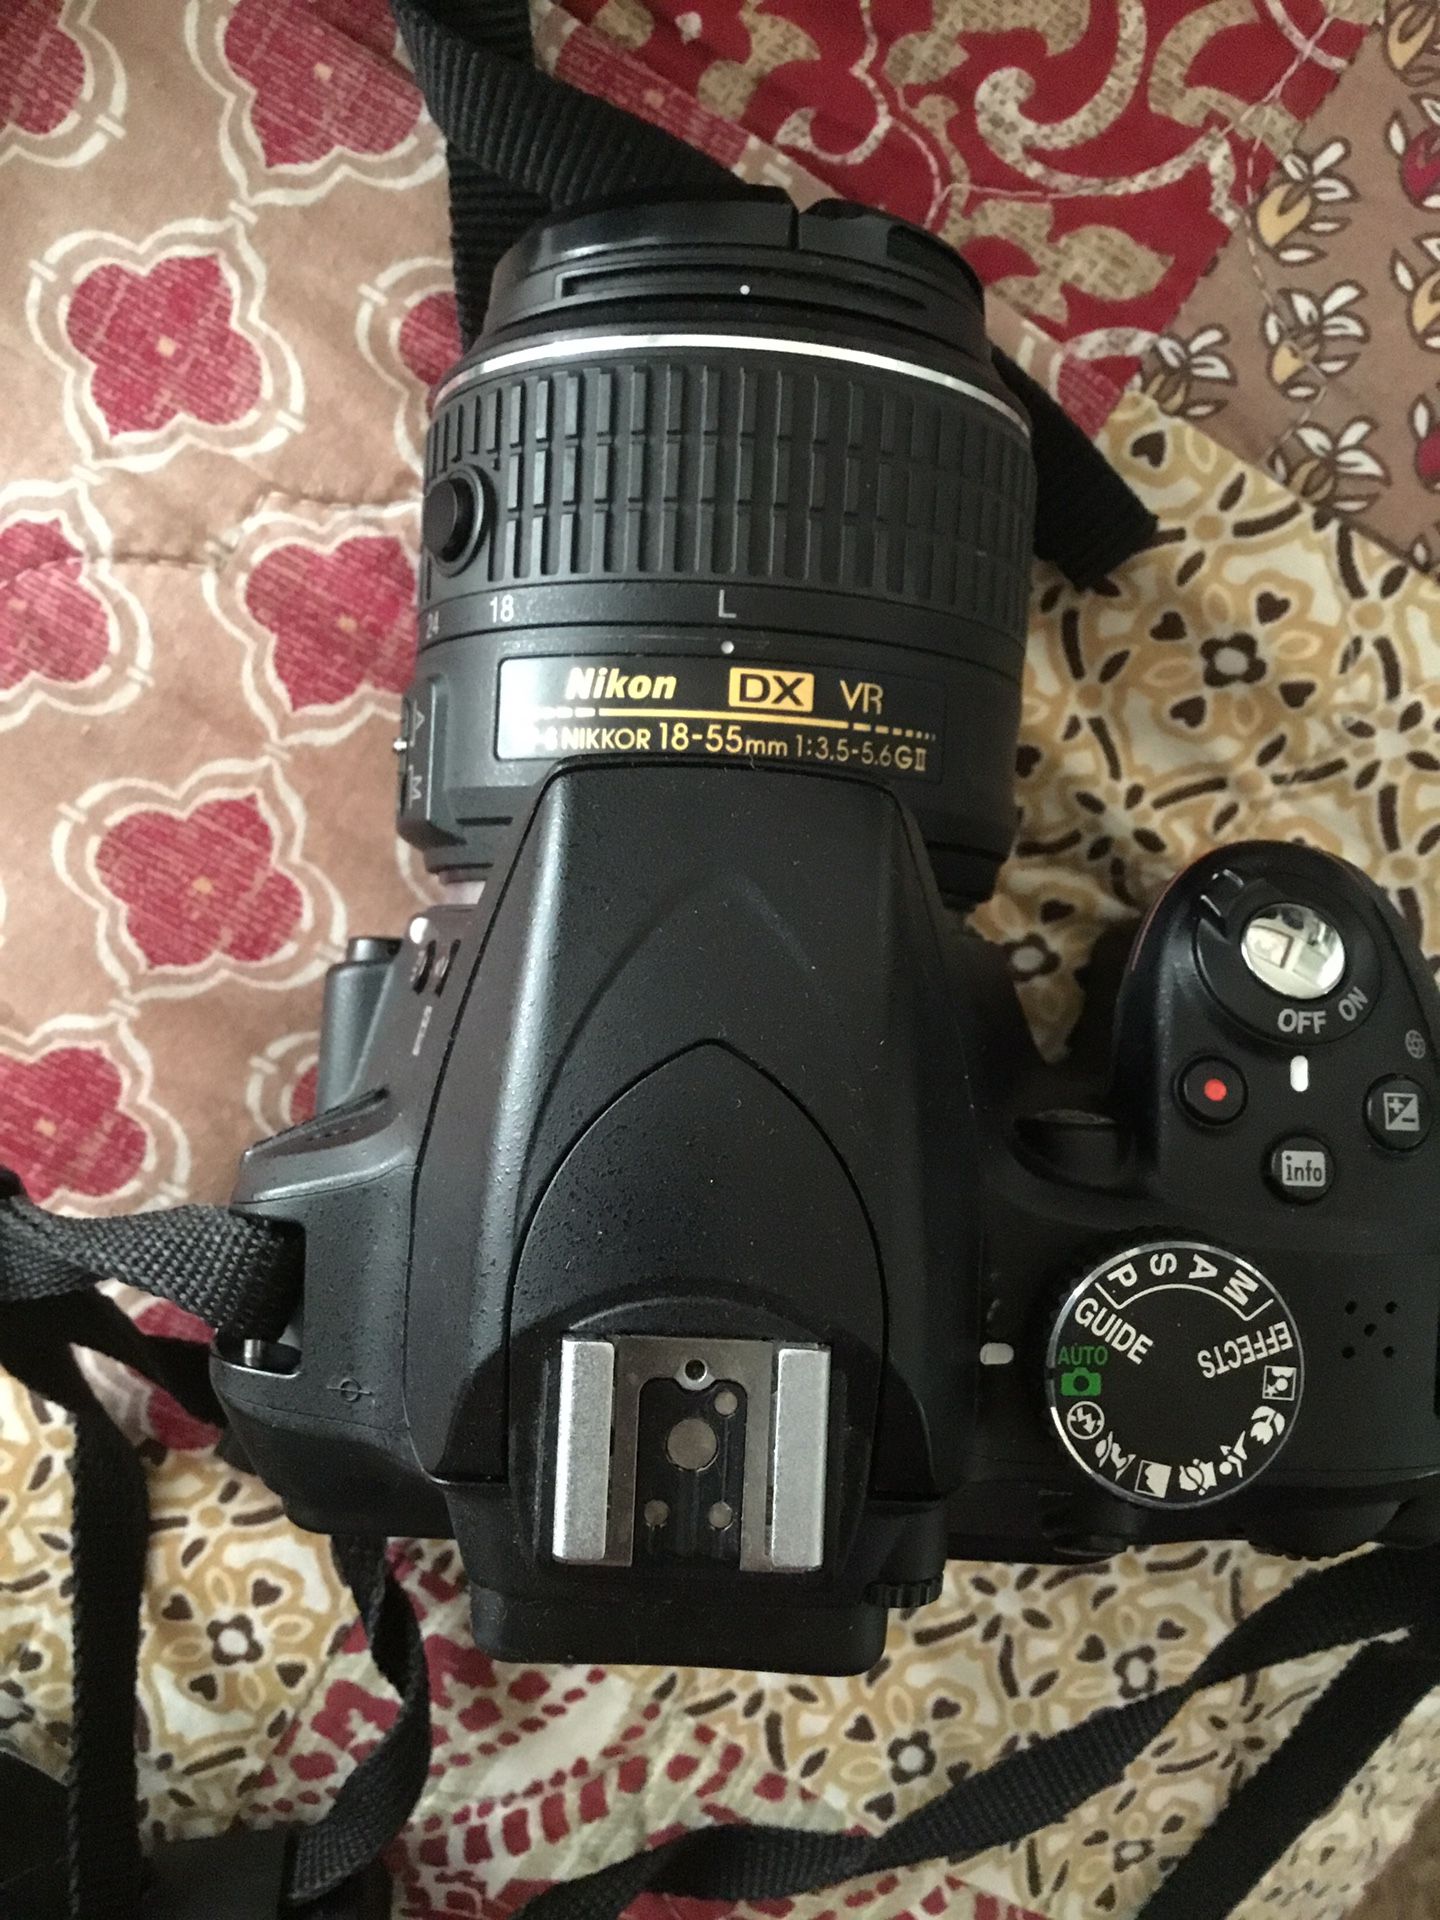 Nikon D3300 with 2 extra lenses